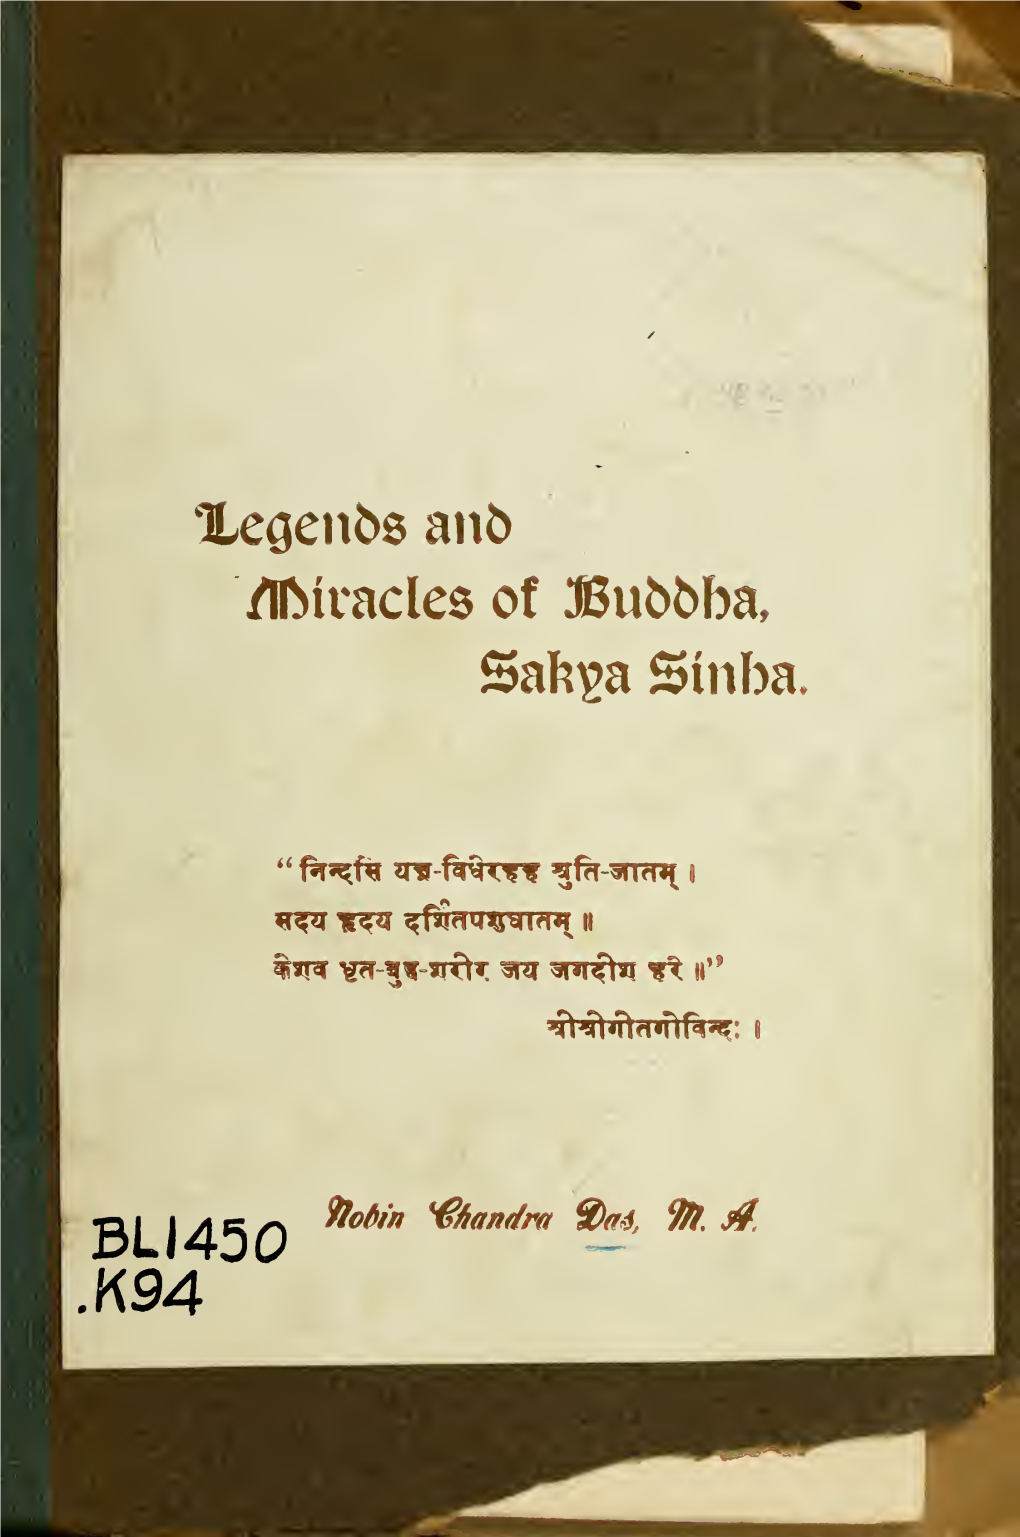 Legends and Miracles of Buddha, Skaya Sinha